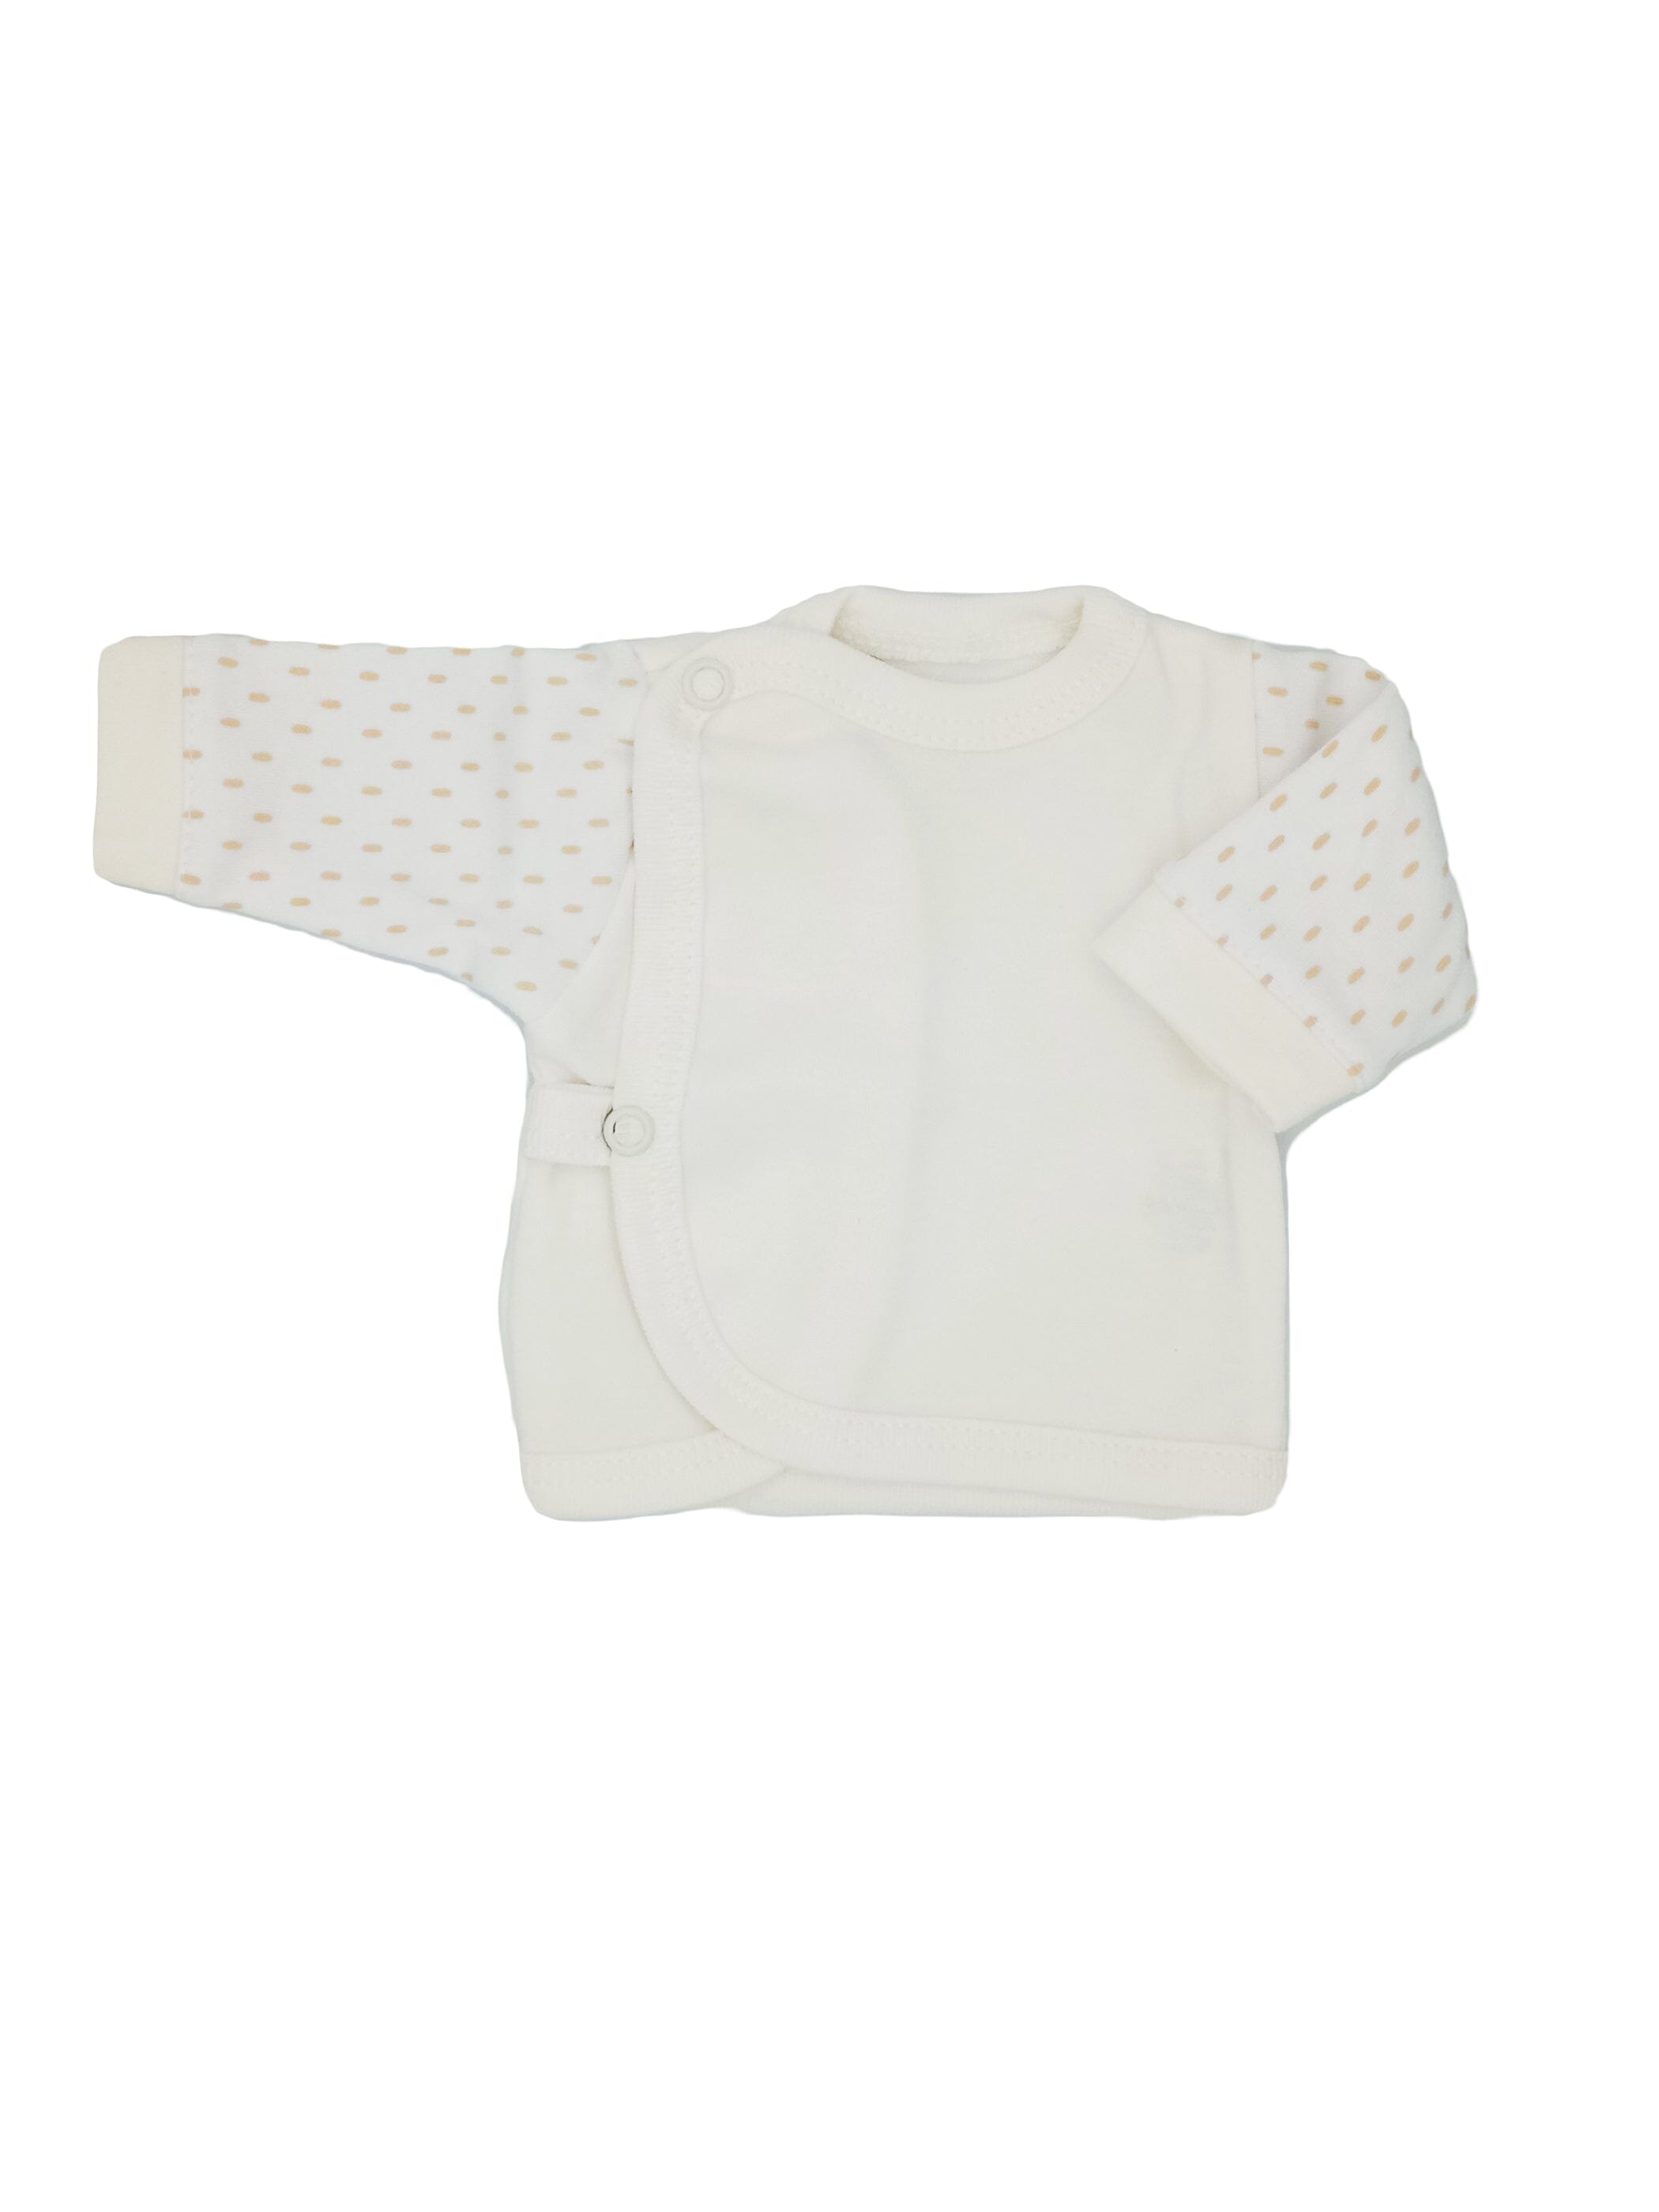 Early Baby Wraparound Top, Cream Top / T-shirt EEVI 